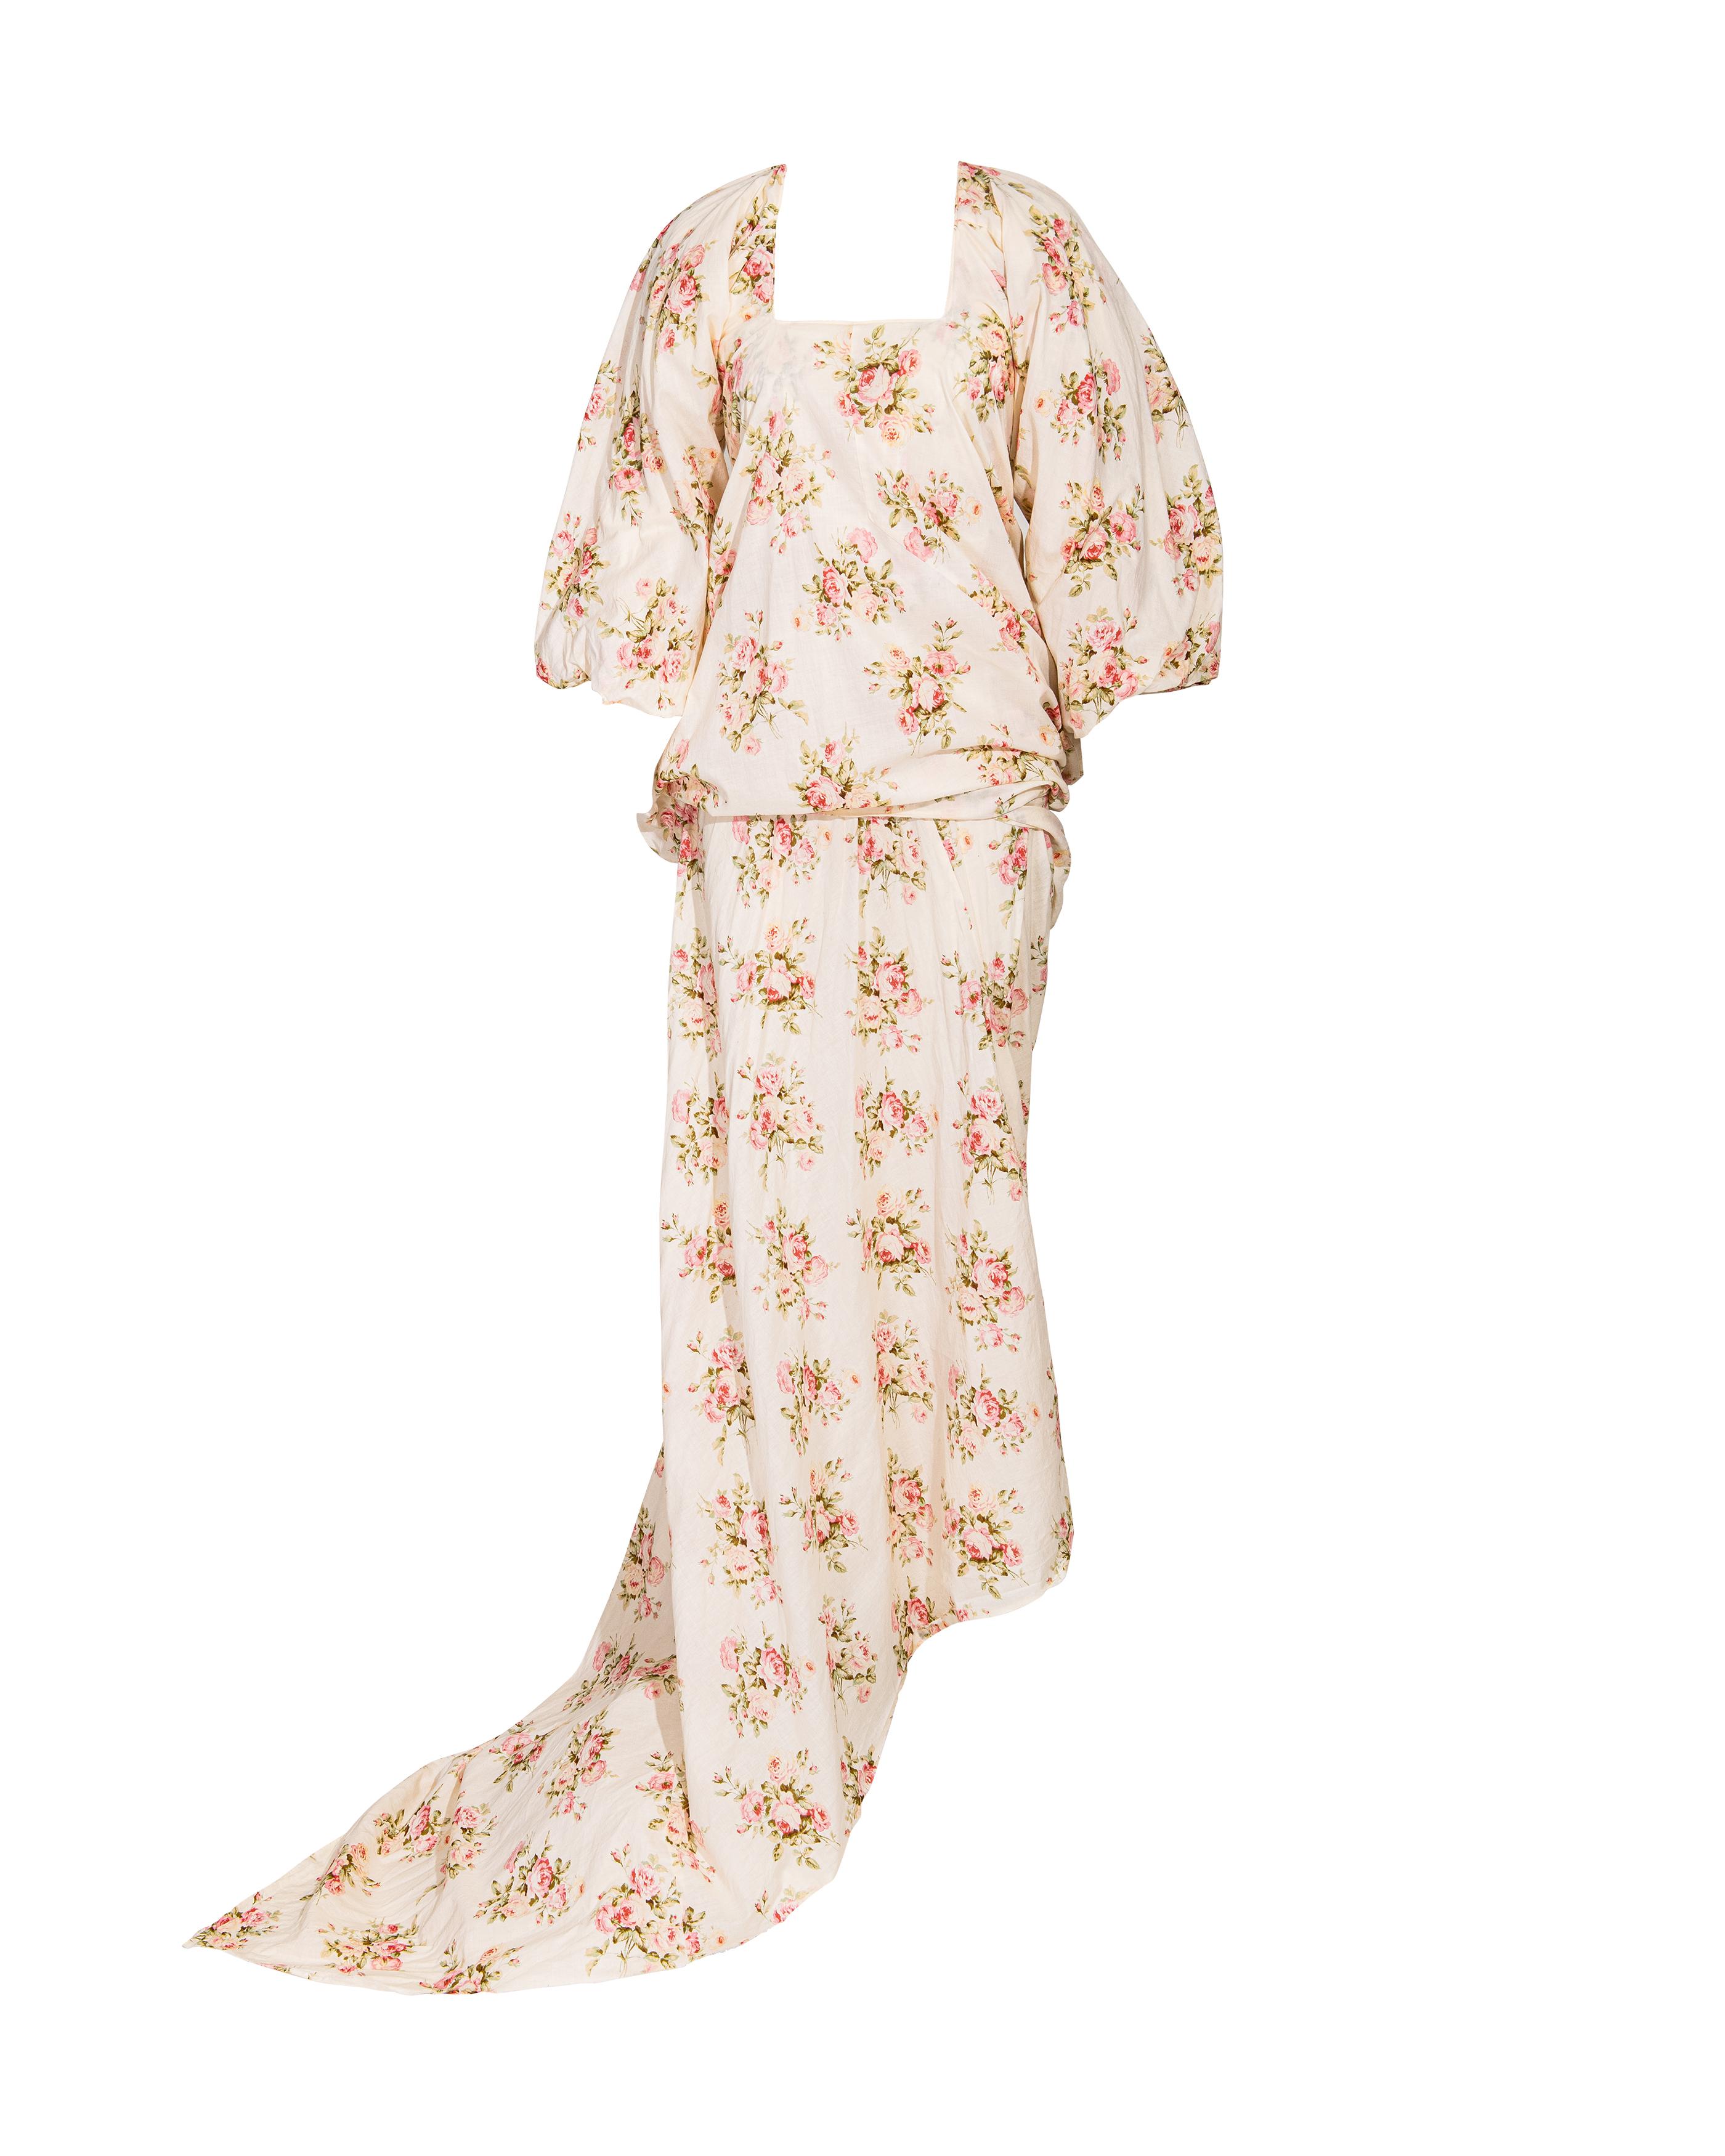 S/S 2008 Junya Watanabe Ecru Cotton Dress with Pink Floral Pattern 5